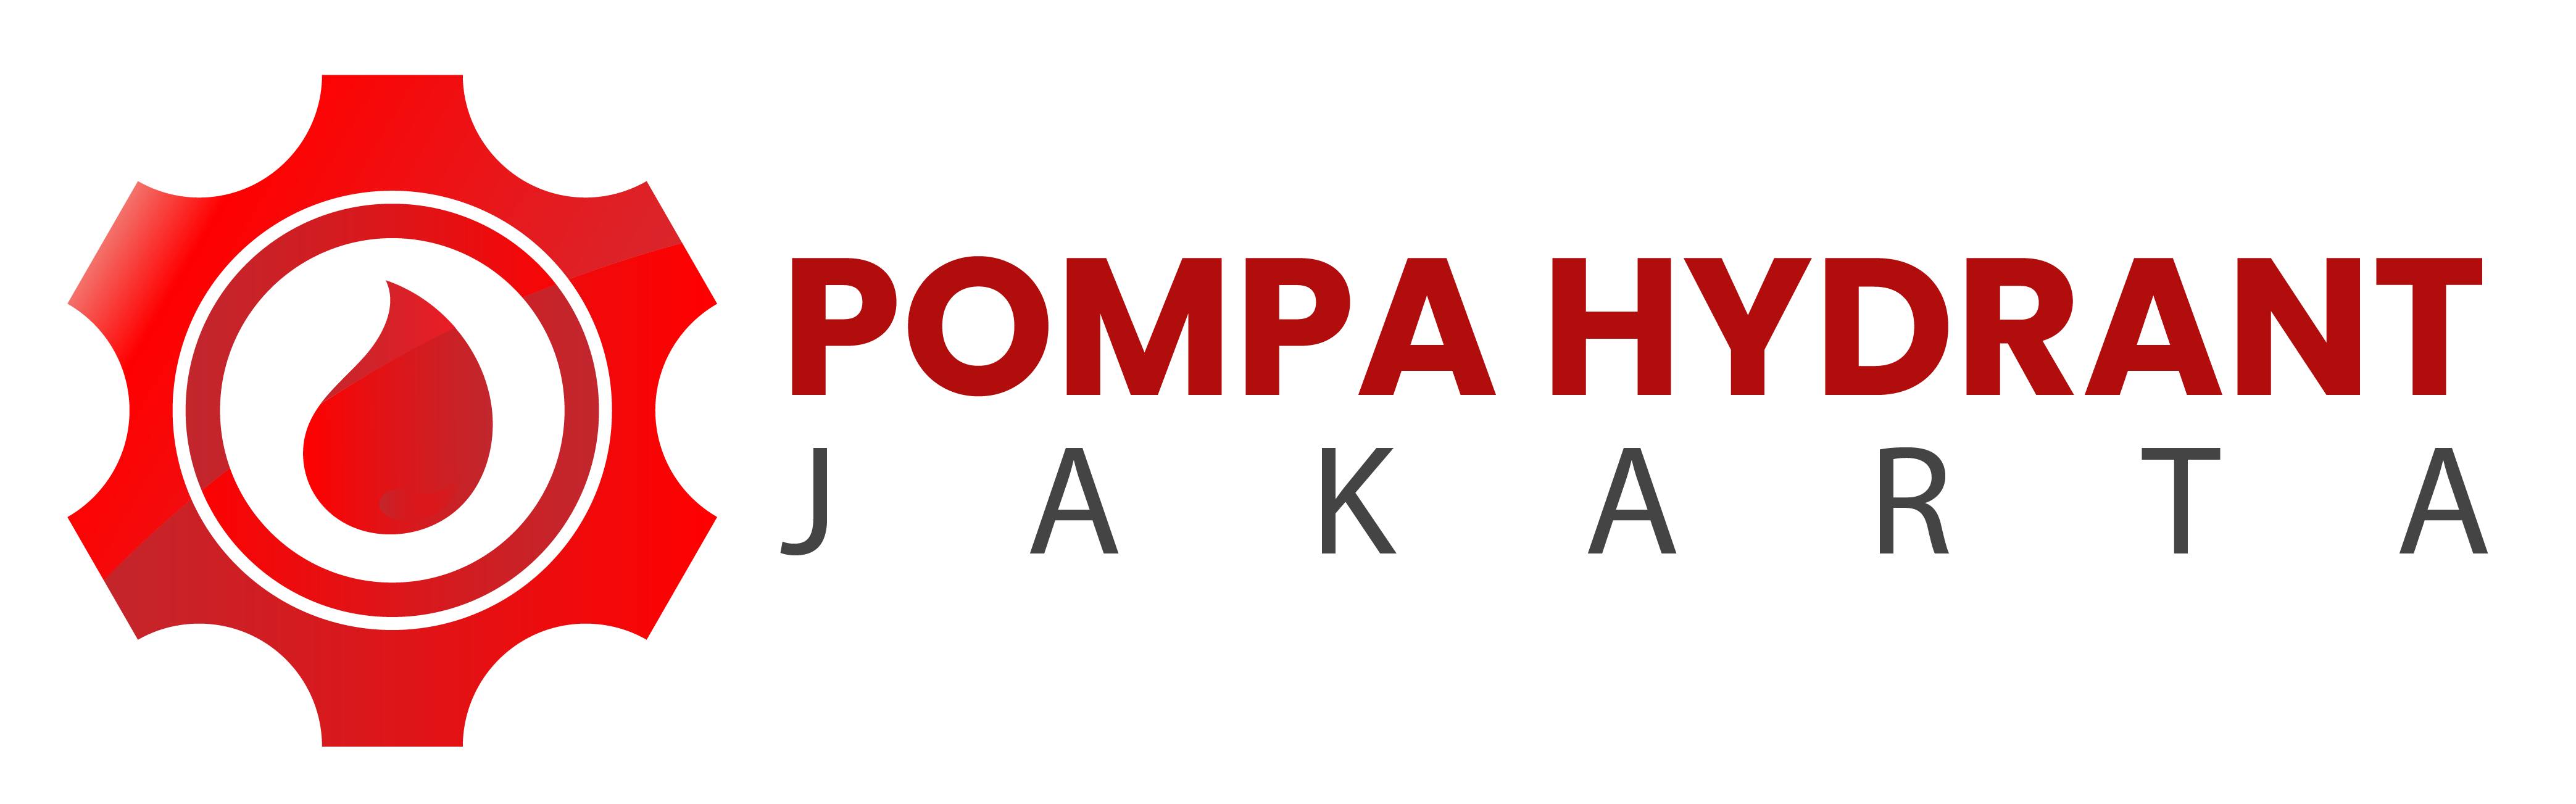 LOGO POMPA HYDRANT JAKARTA long-03